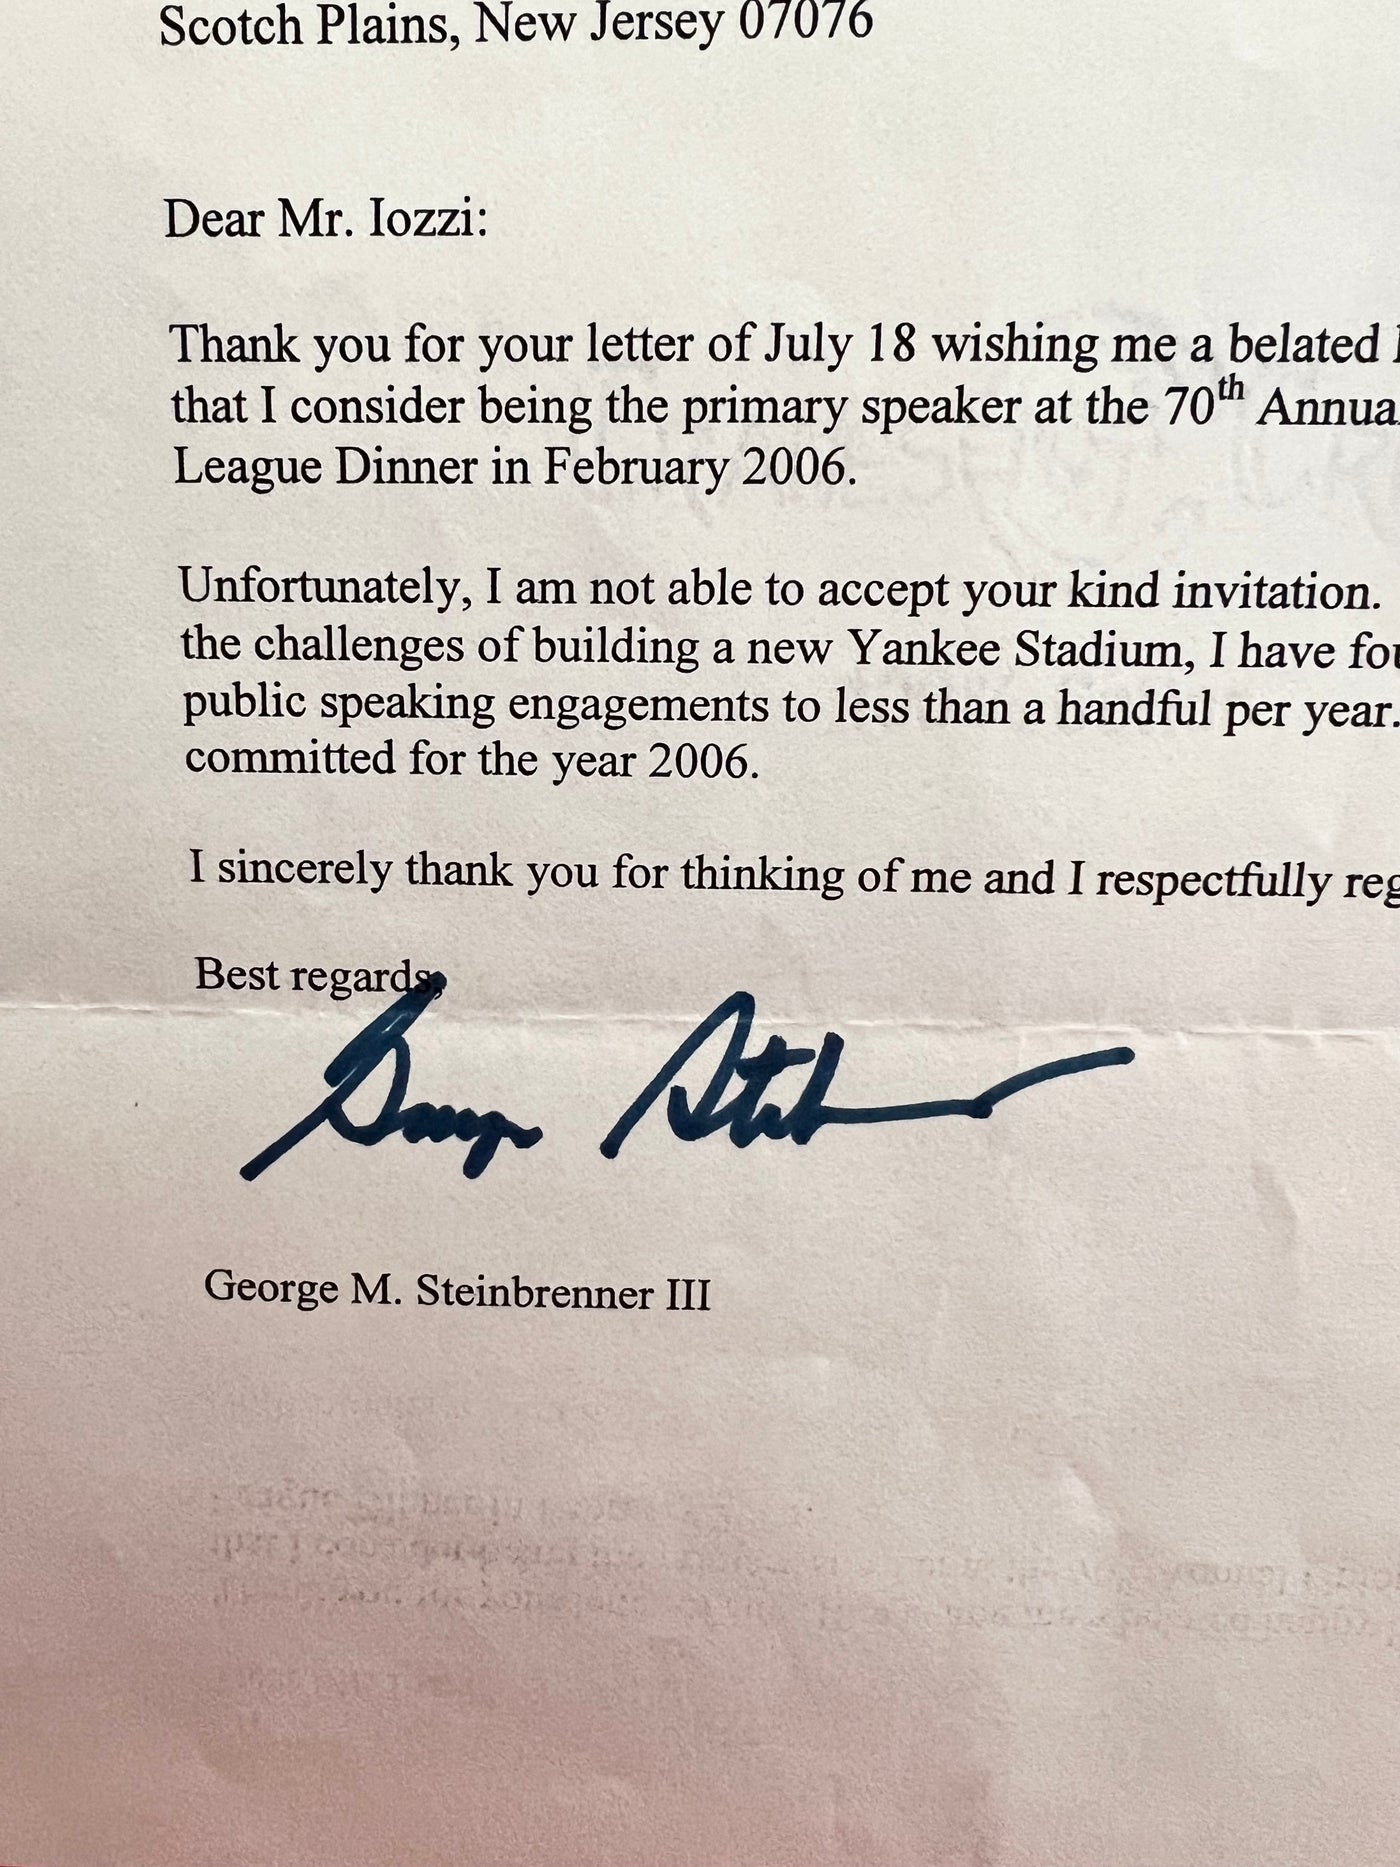 George Steinbrenner Signed 2005 Yankees Letter Beckett authentication New York Yankees letterhead